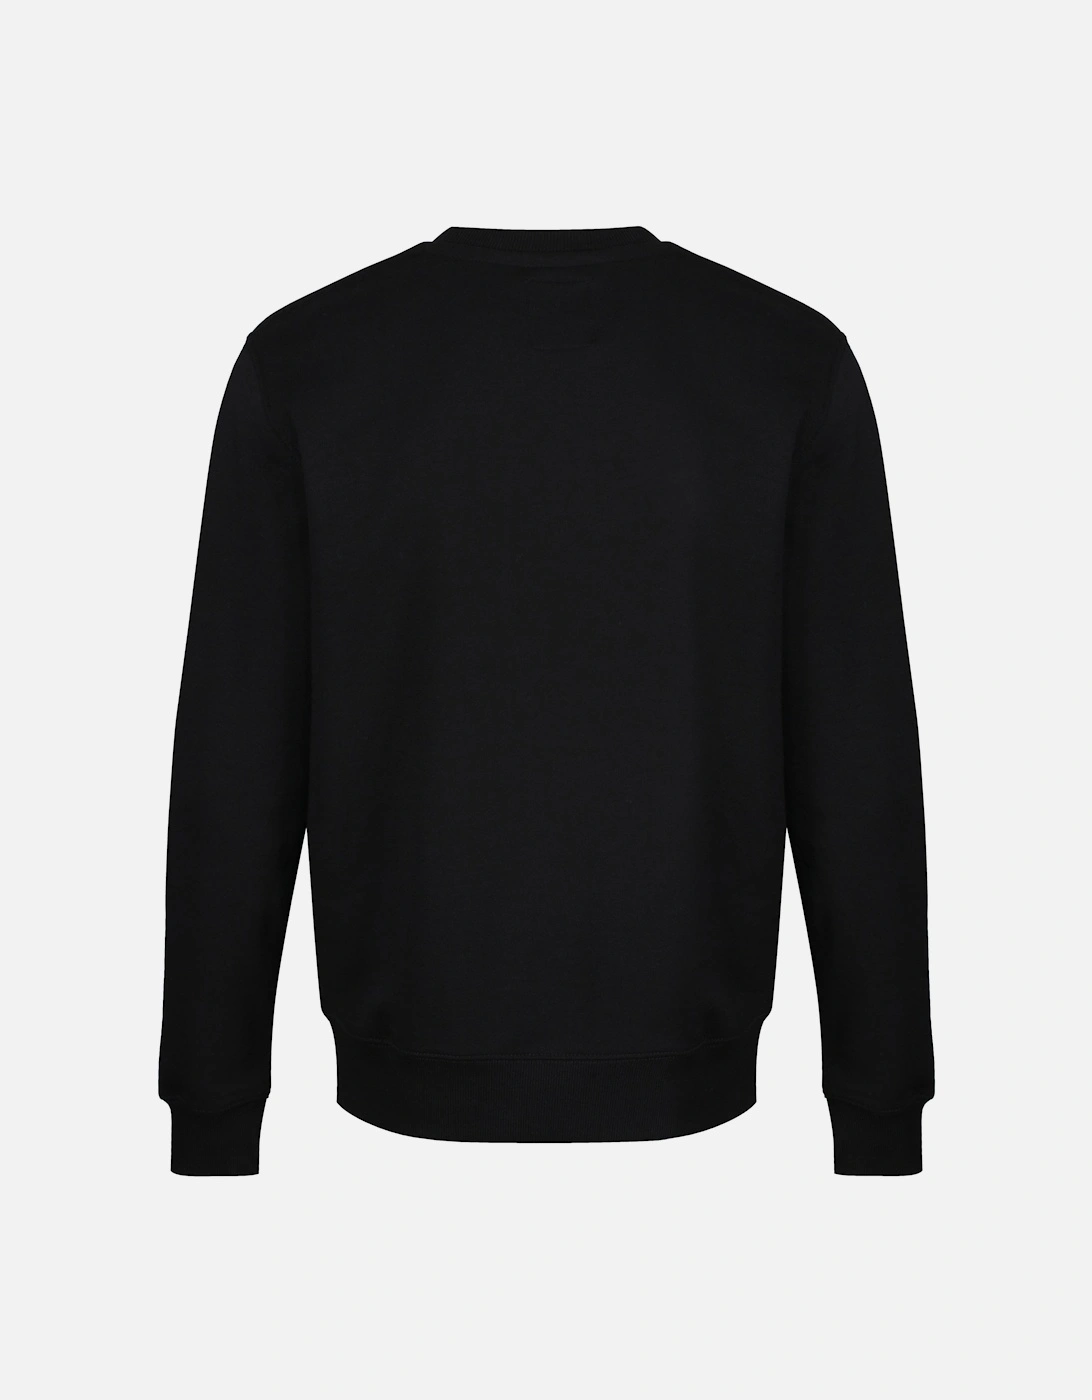 Limited Edition Mars Reflective Sweatshirt | Black